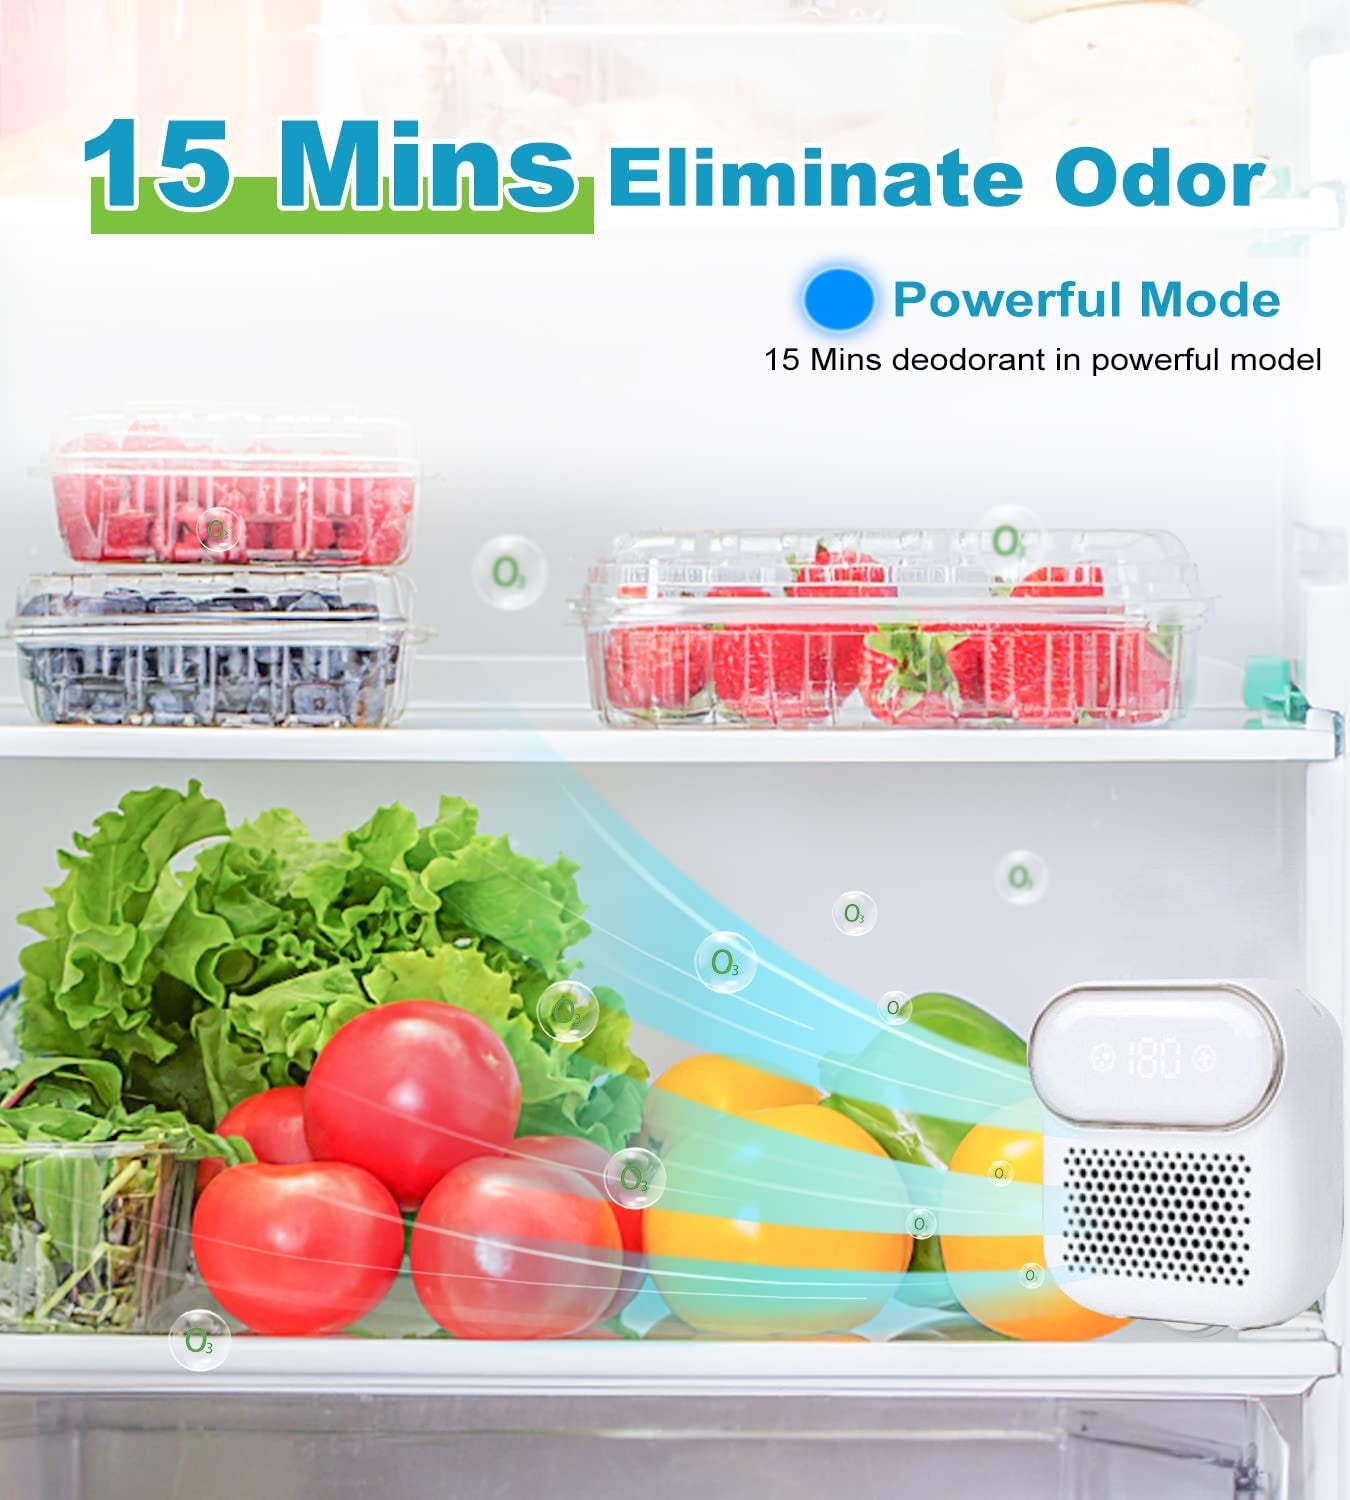 refrigerator deodorizer | best refrigerator deodorizer | fridge deodorizer diy